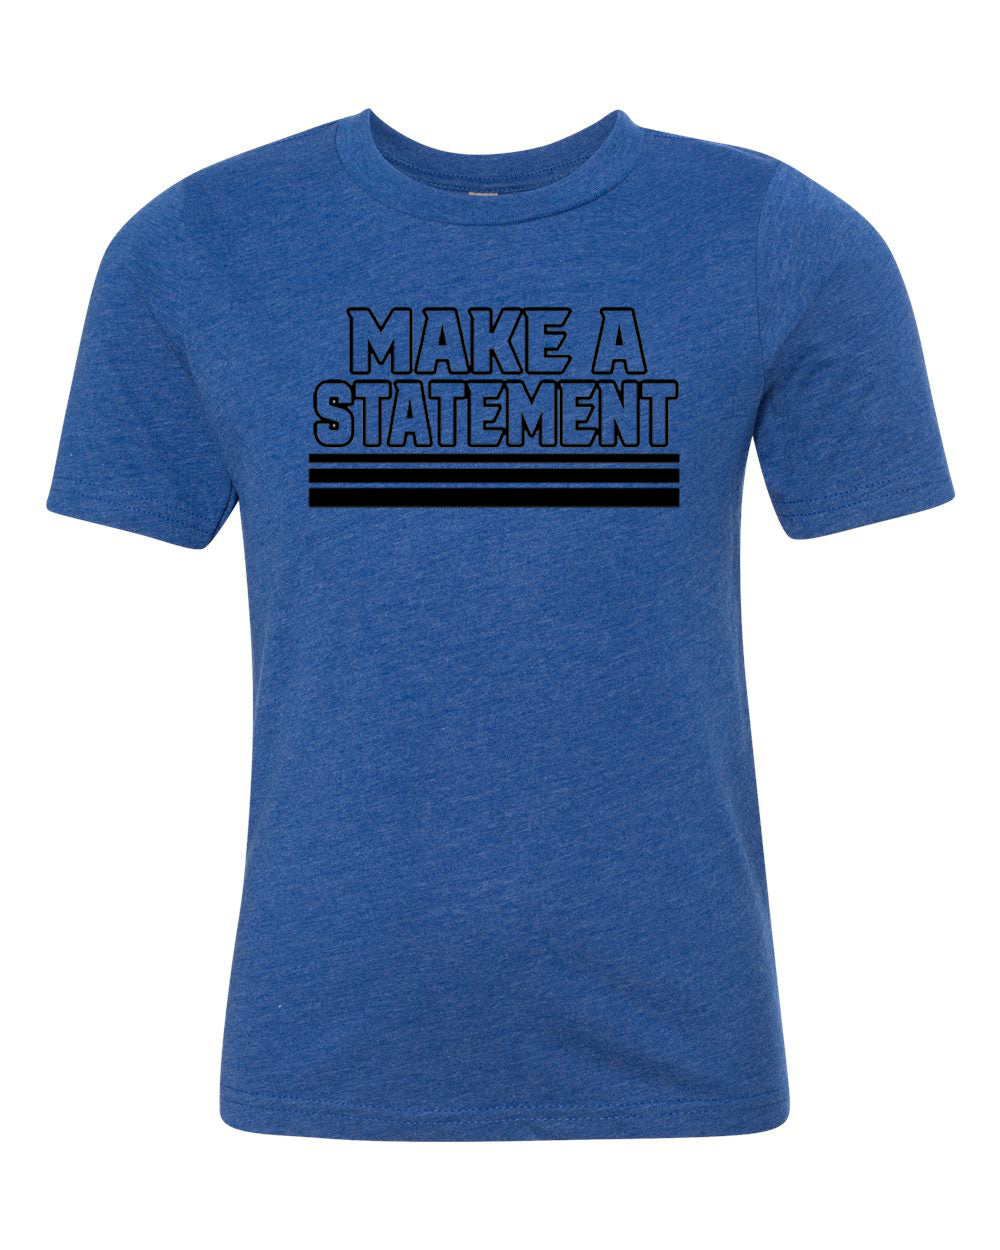 Make A Statement Youth T-Shirt Royal Blue